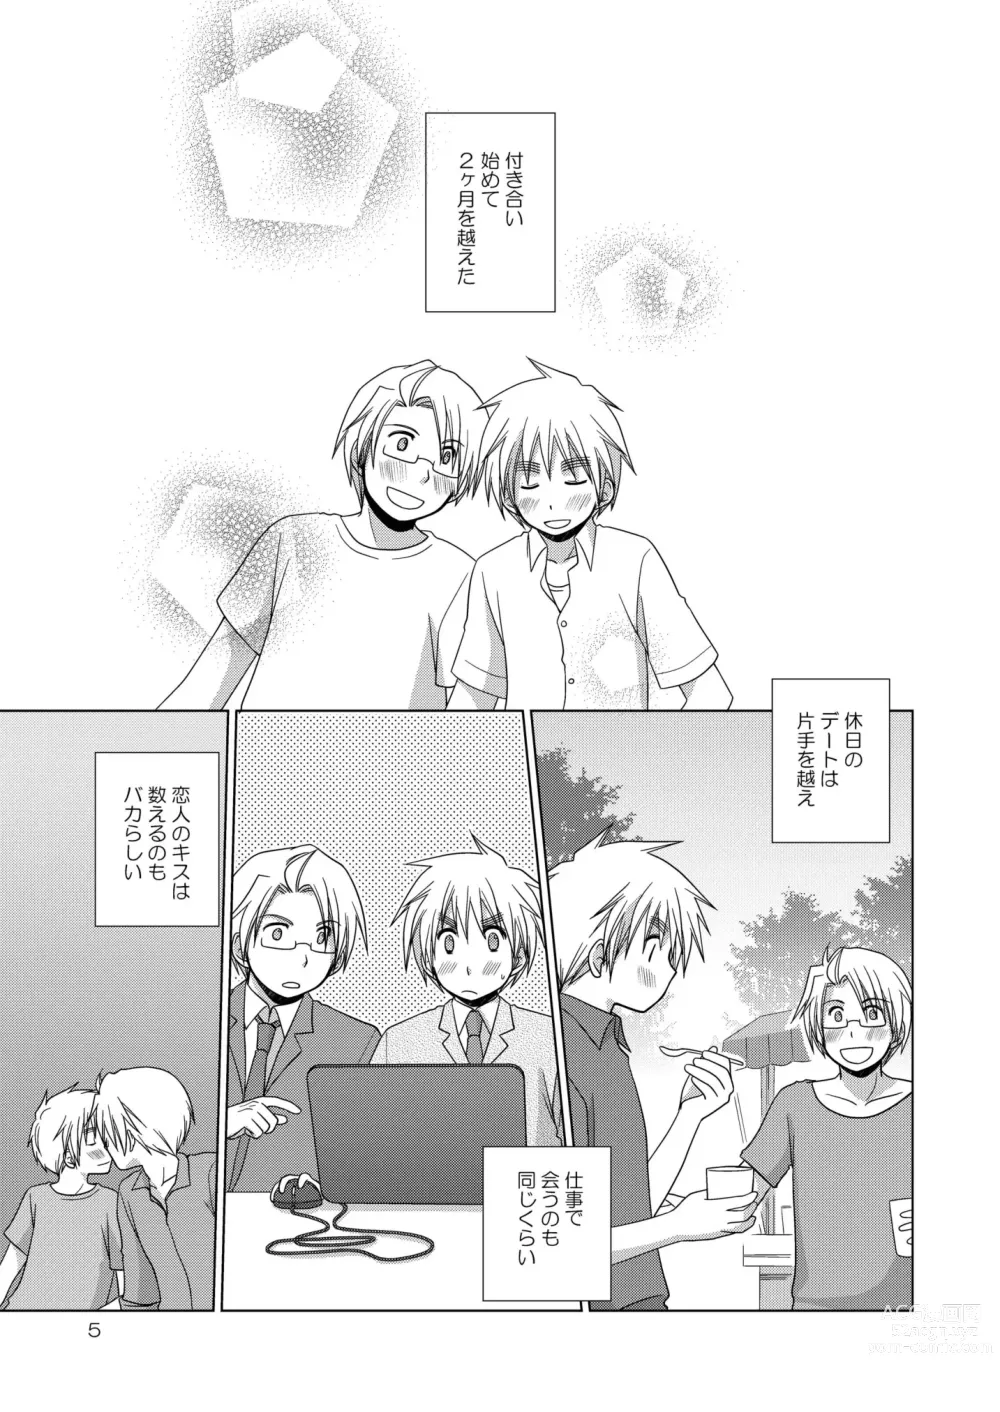 Page 5 of doujinshi [Hidariya